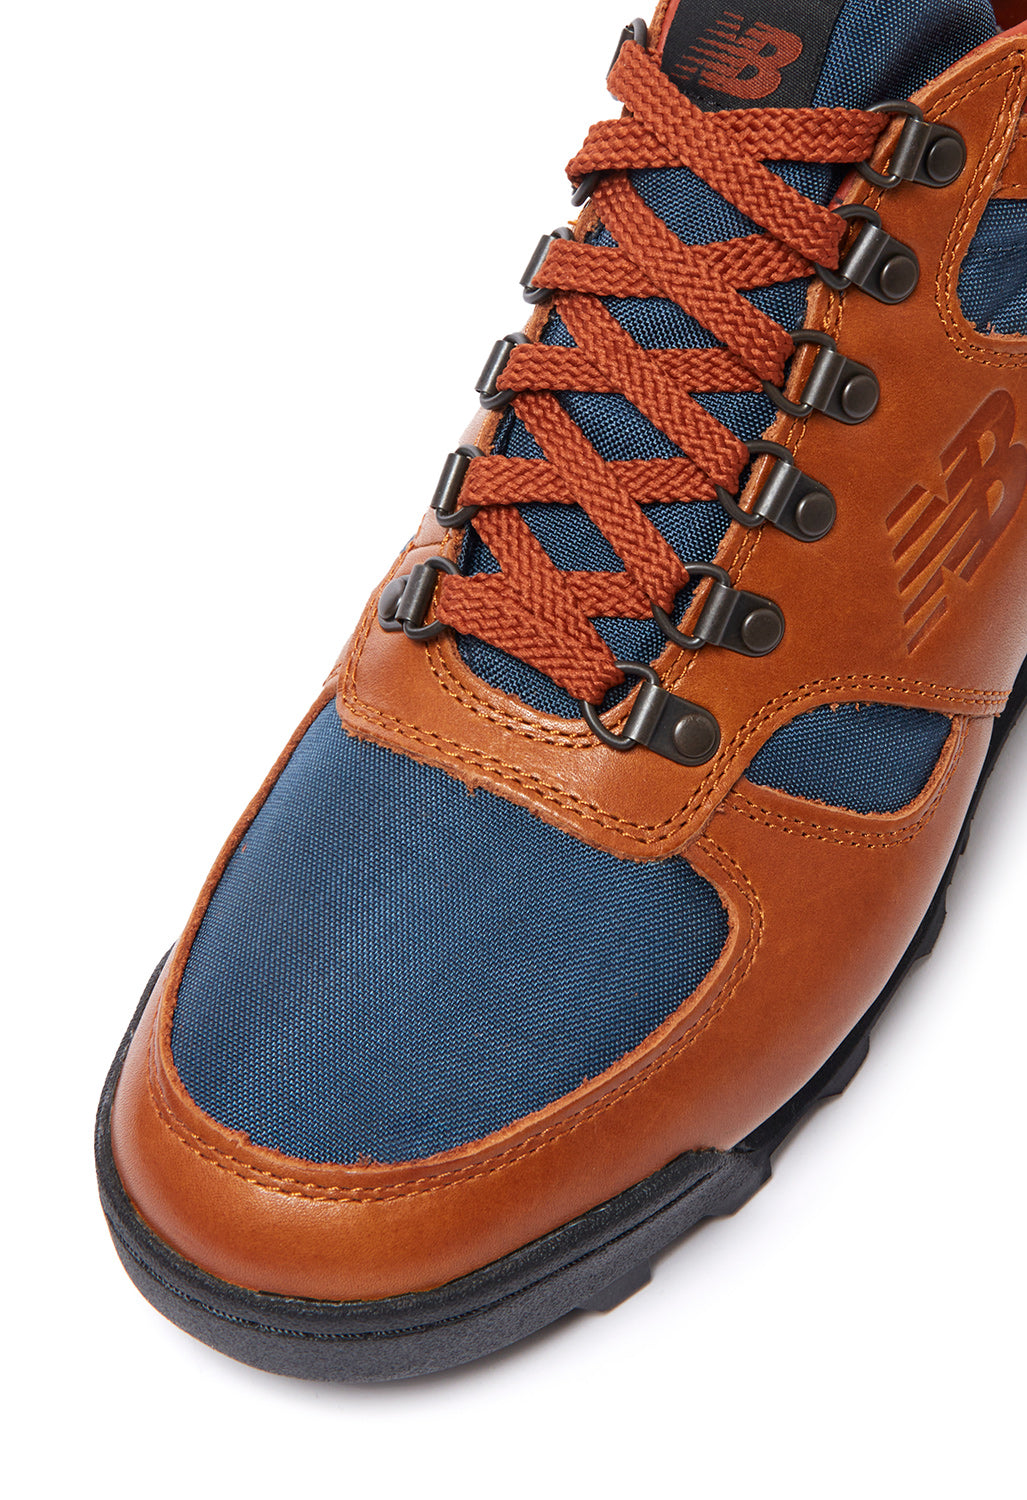 New Balance Rainier Boots - Brown